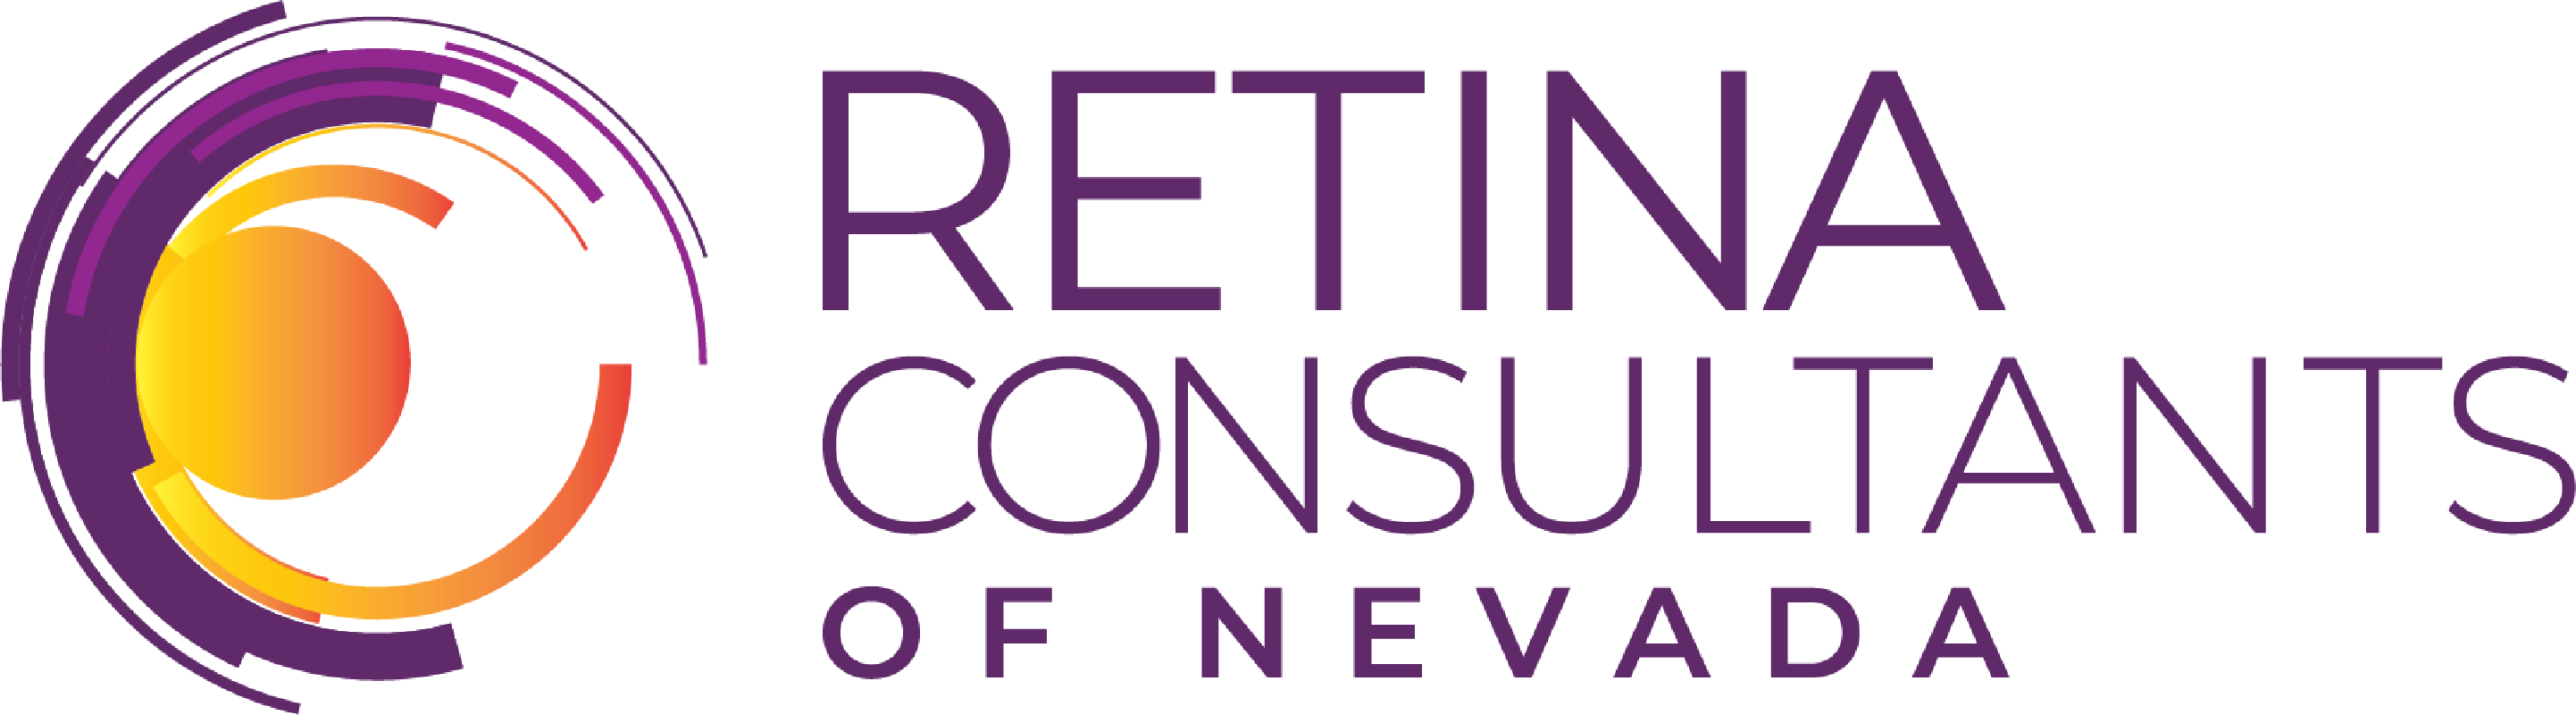 Retina Consultants of Nevada Logo